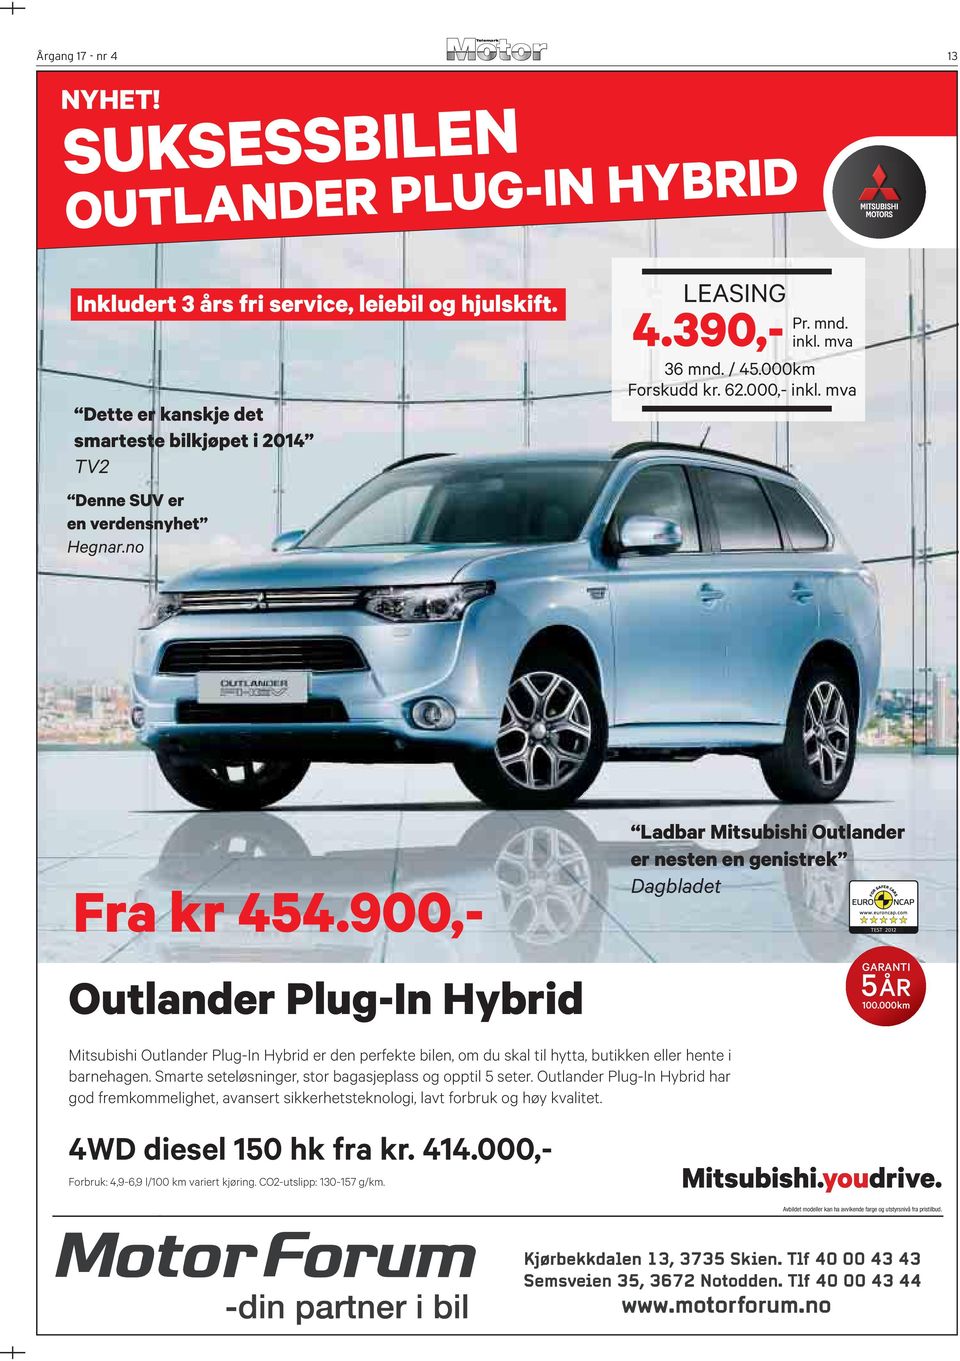 900,- Ladbar Mitsubishi Outlander er nesten en genistrek Dagbladet TEST 2009 2012 Outlander Plug-In Hybrid GARANTI 5ÅR 100.